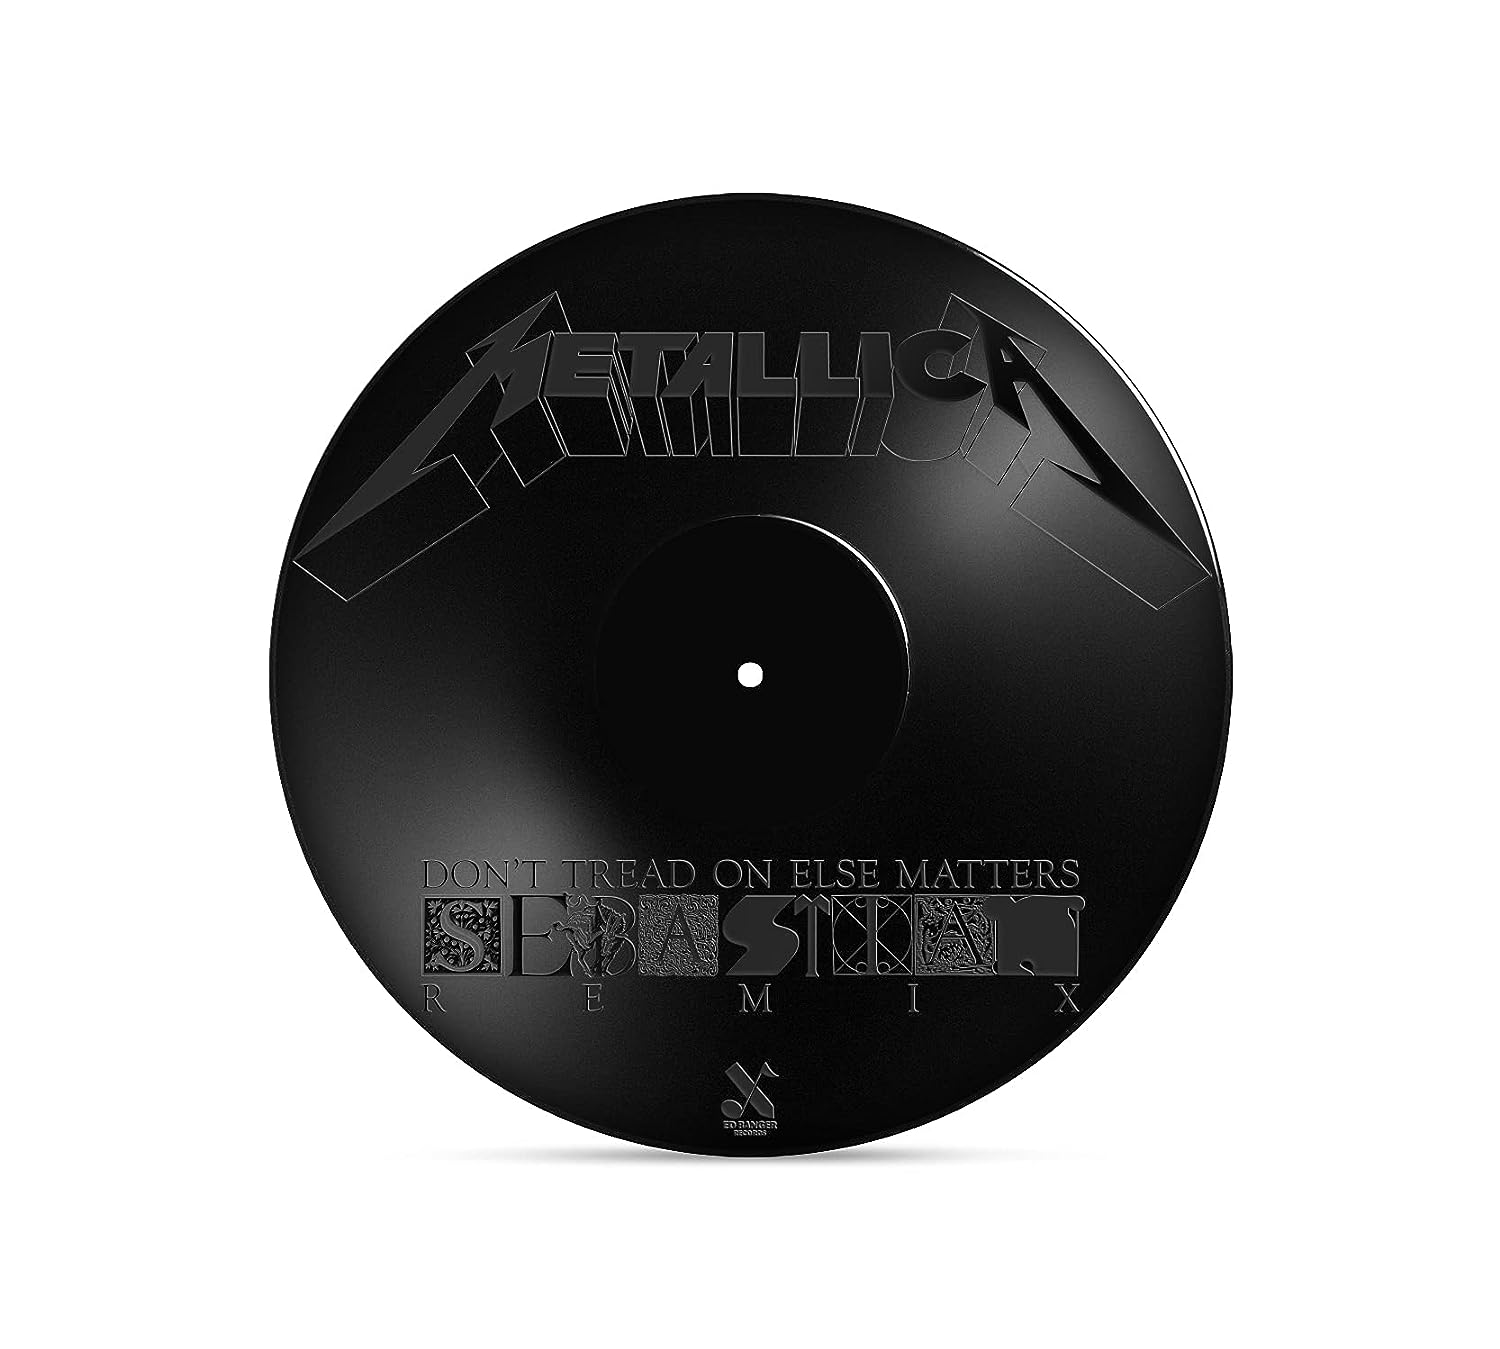 Metallica (메탈리카) - Don't Tread On Else Matters (SebastiAn Remix) [LP]